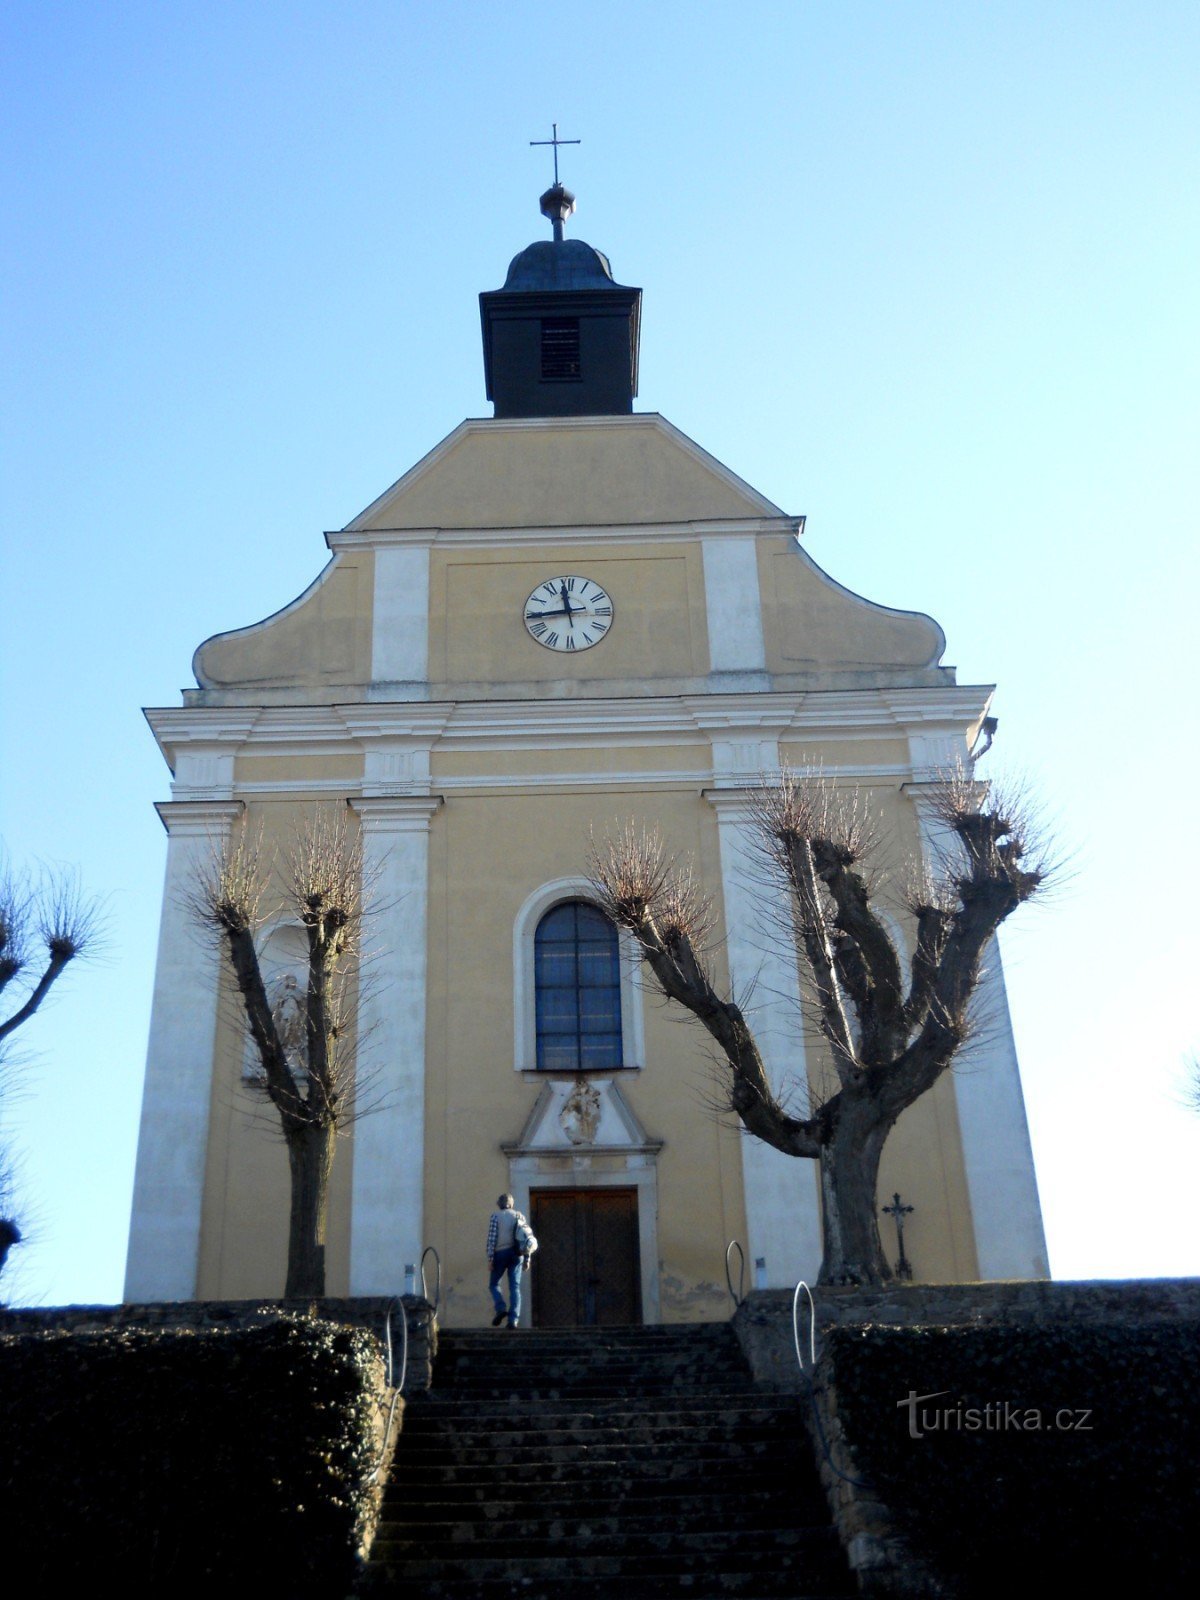 Kostelní Vydří - église de pèlerinage Notre-Dame du Mont Carmel